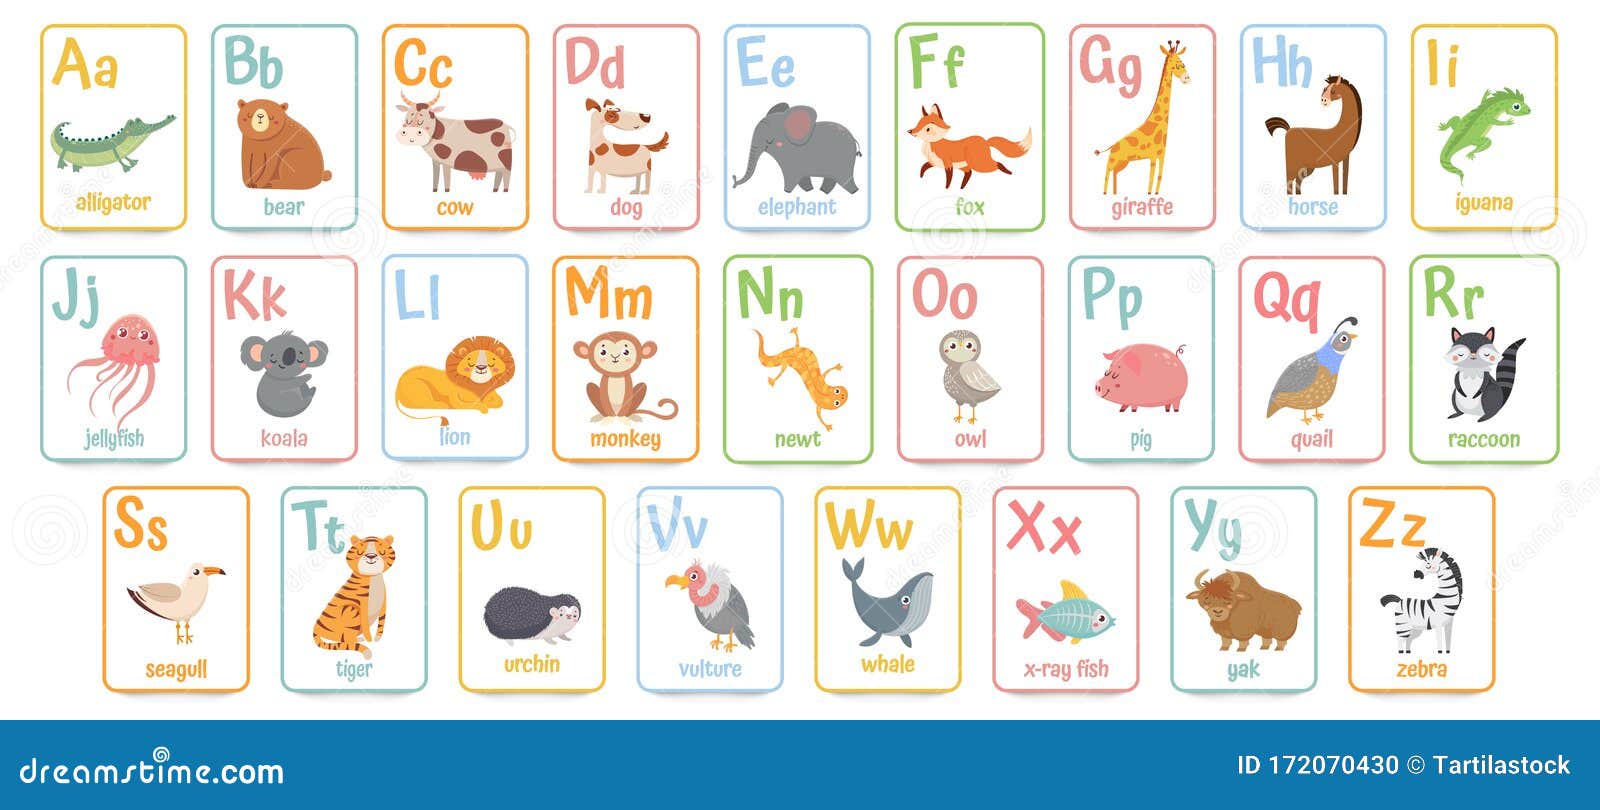 Children's Flash Cards Kids Educational Pre School Alphabet Learning 